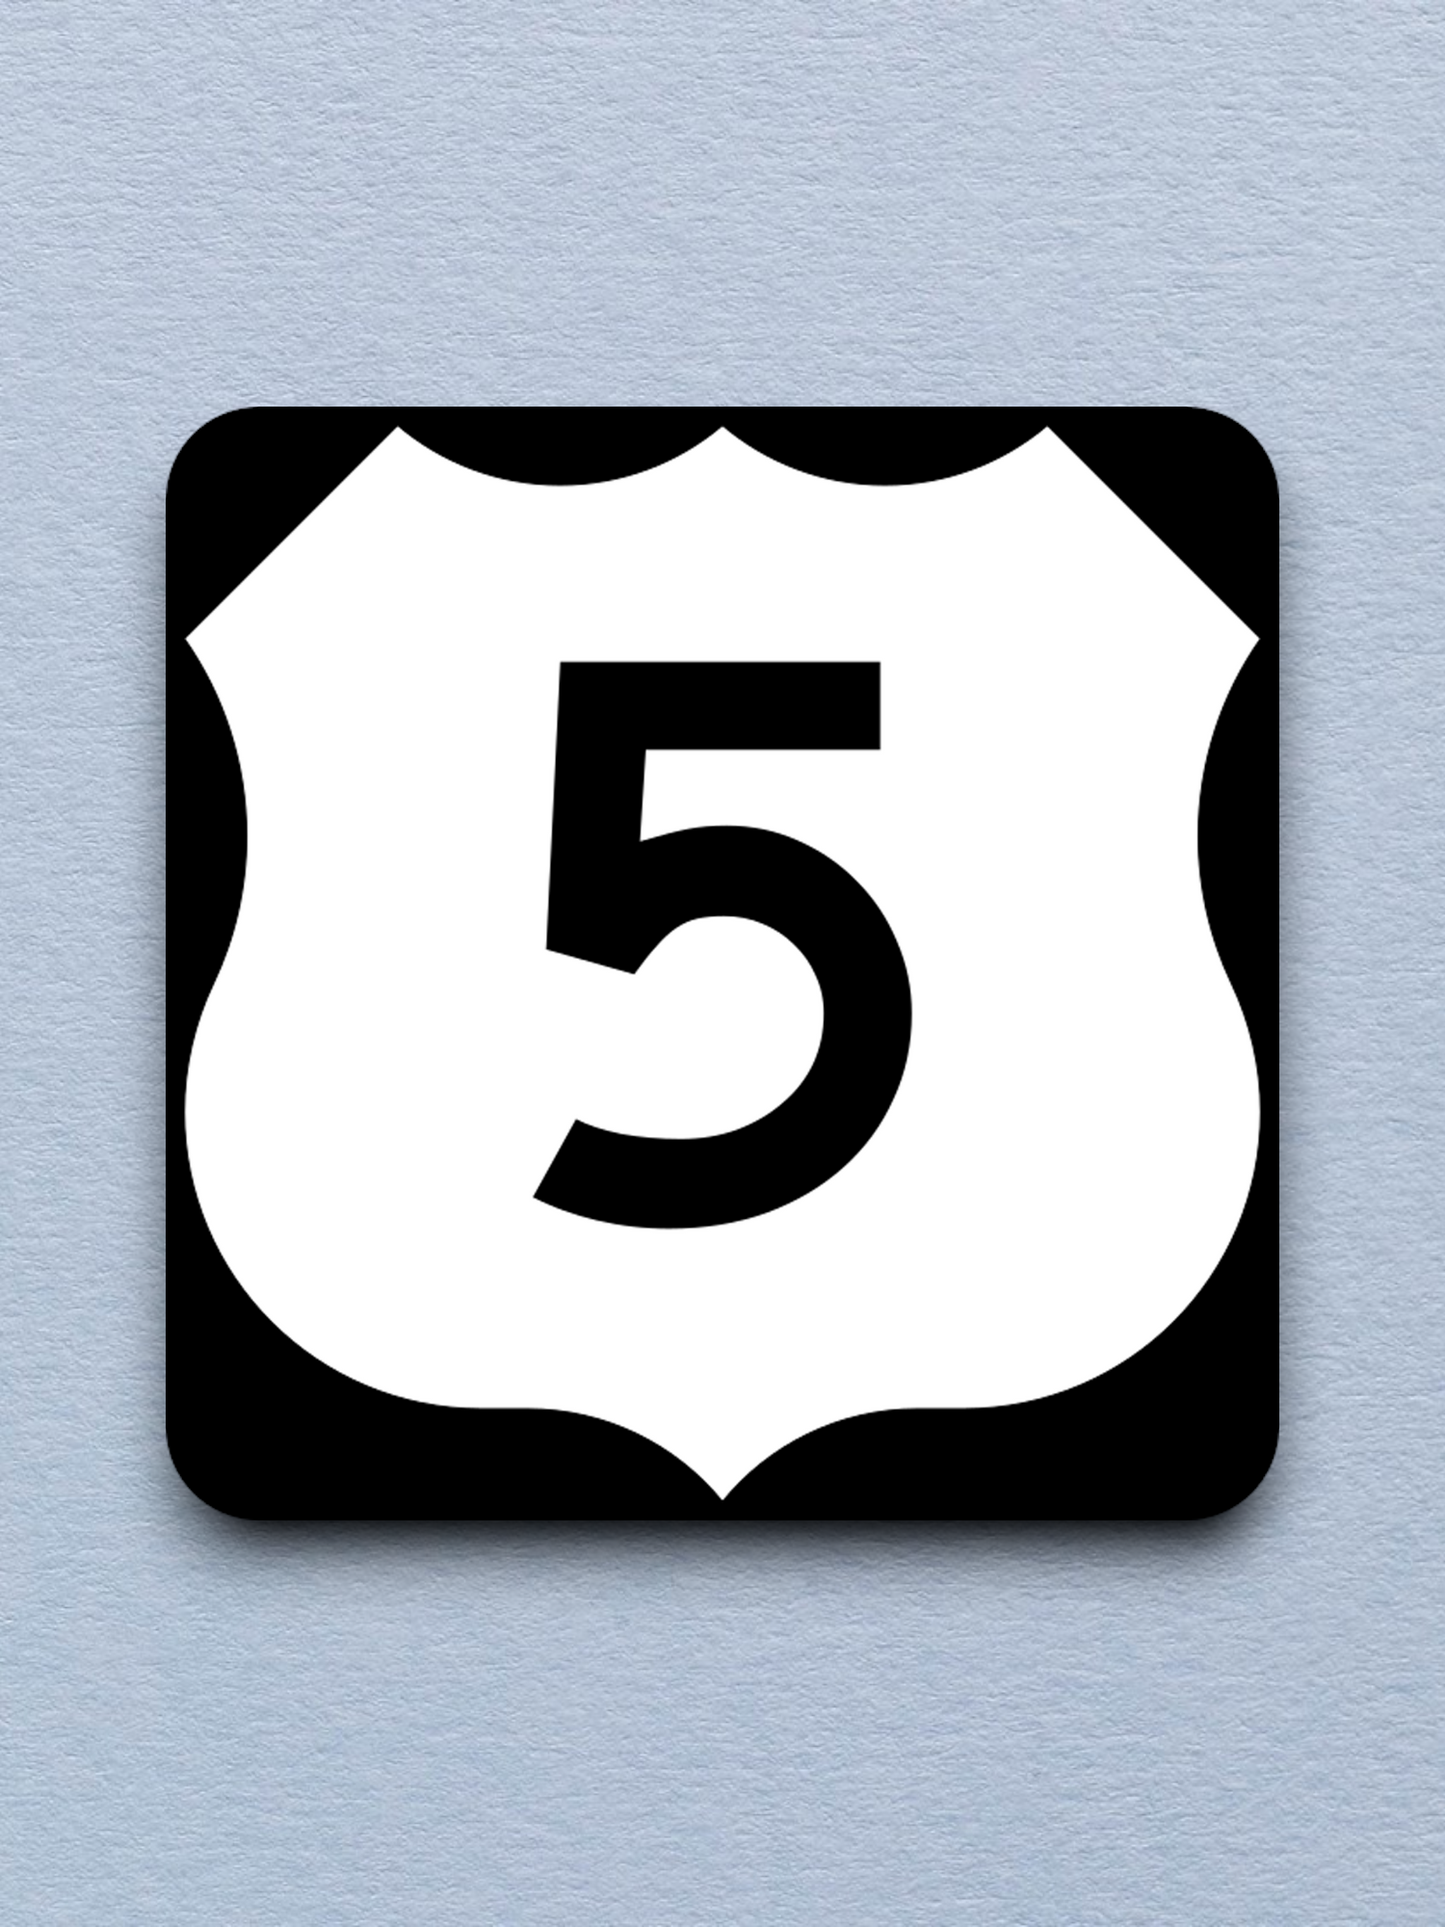 U.S. Route 5 Road Sign Sticker